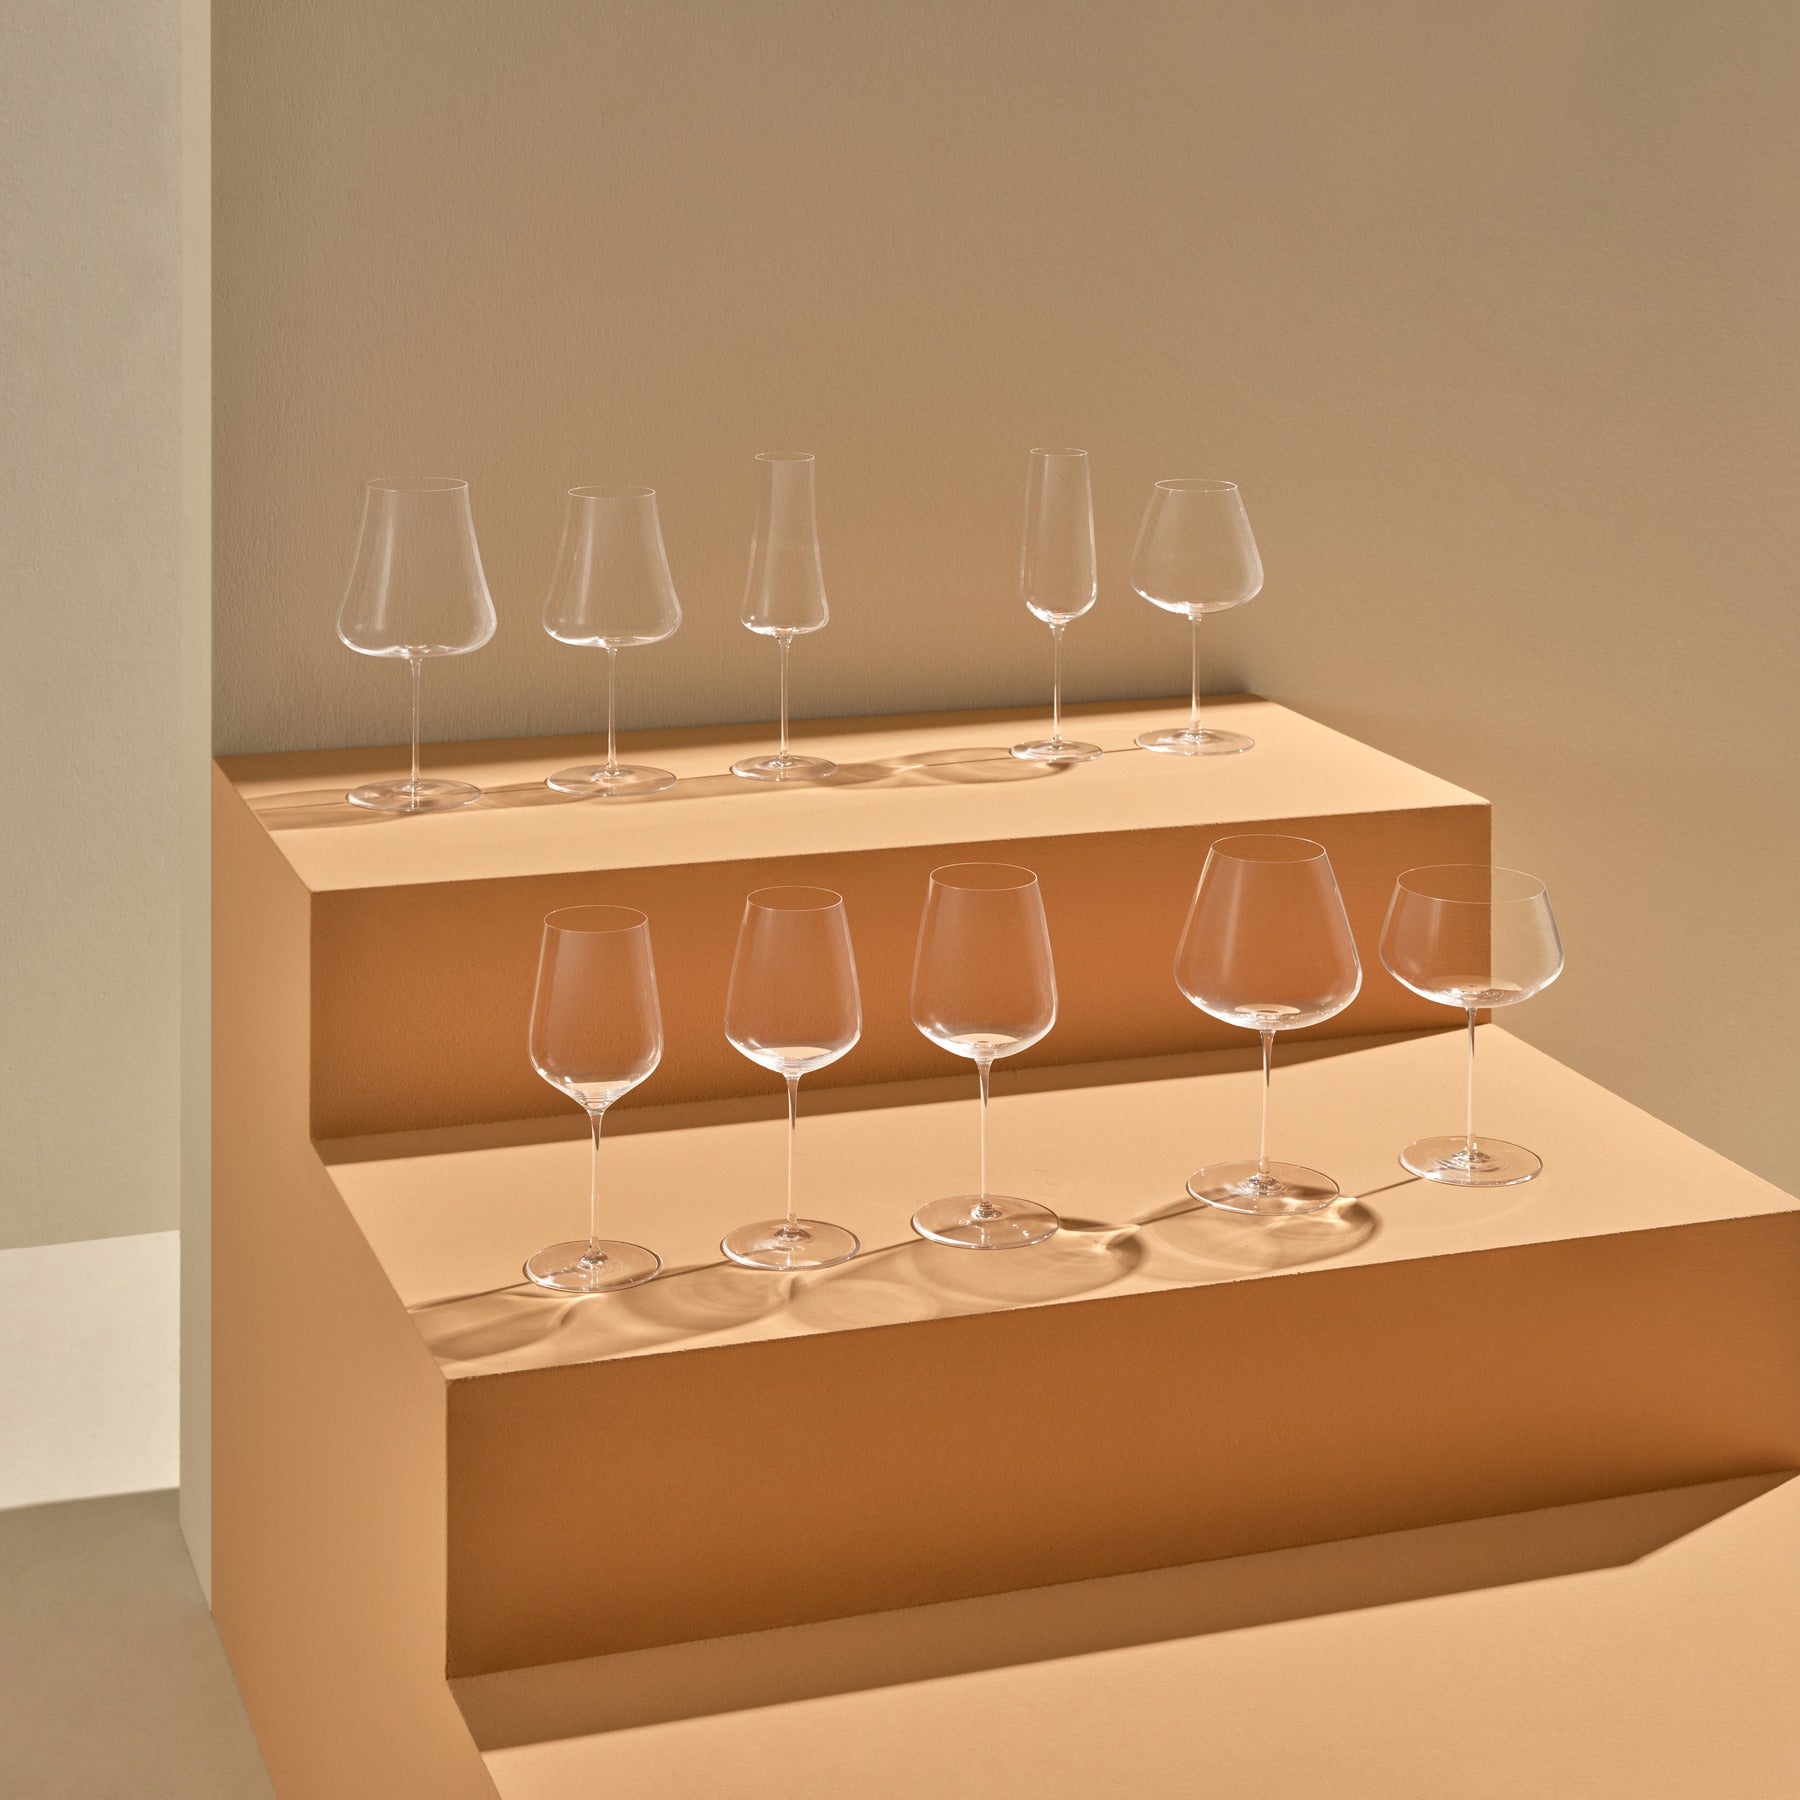 CCO Stemmed Wine Glass